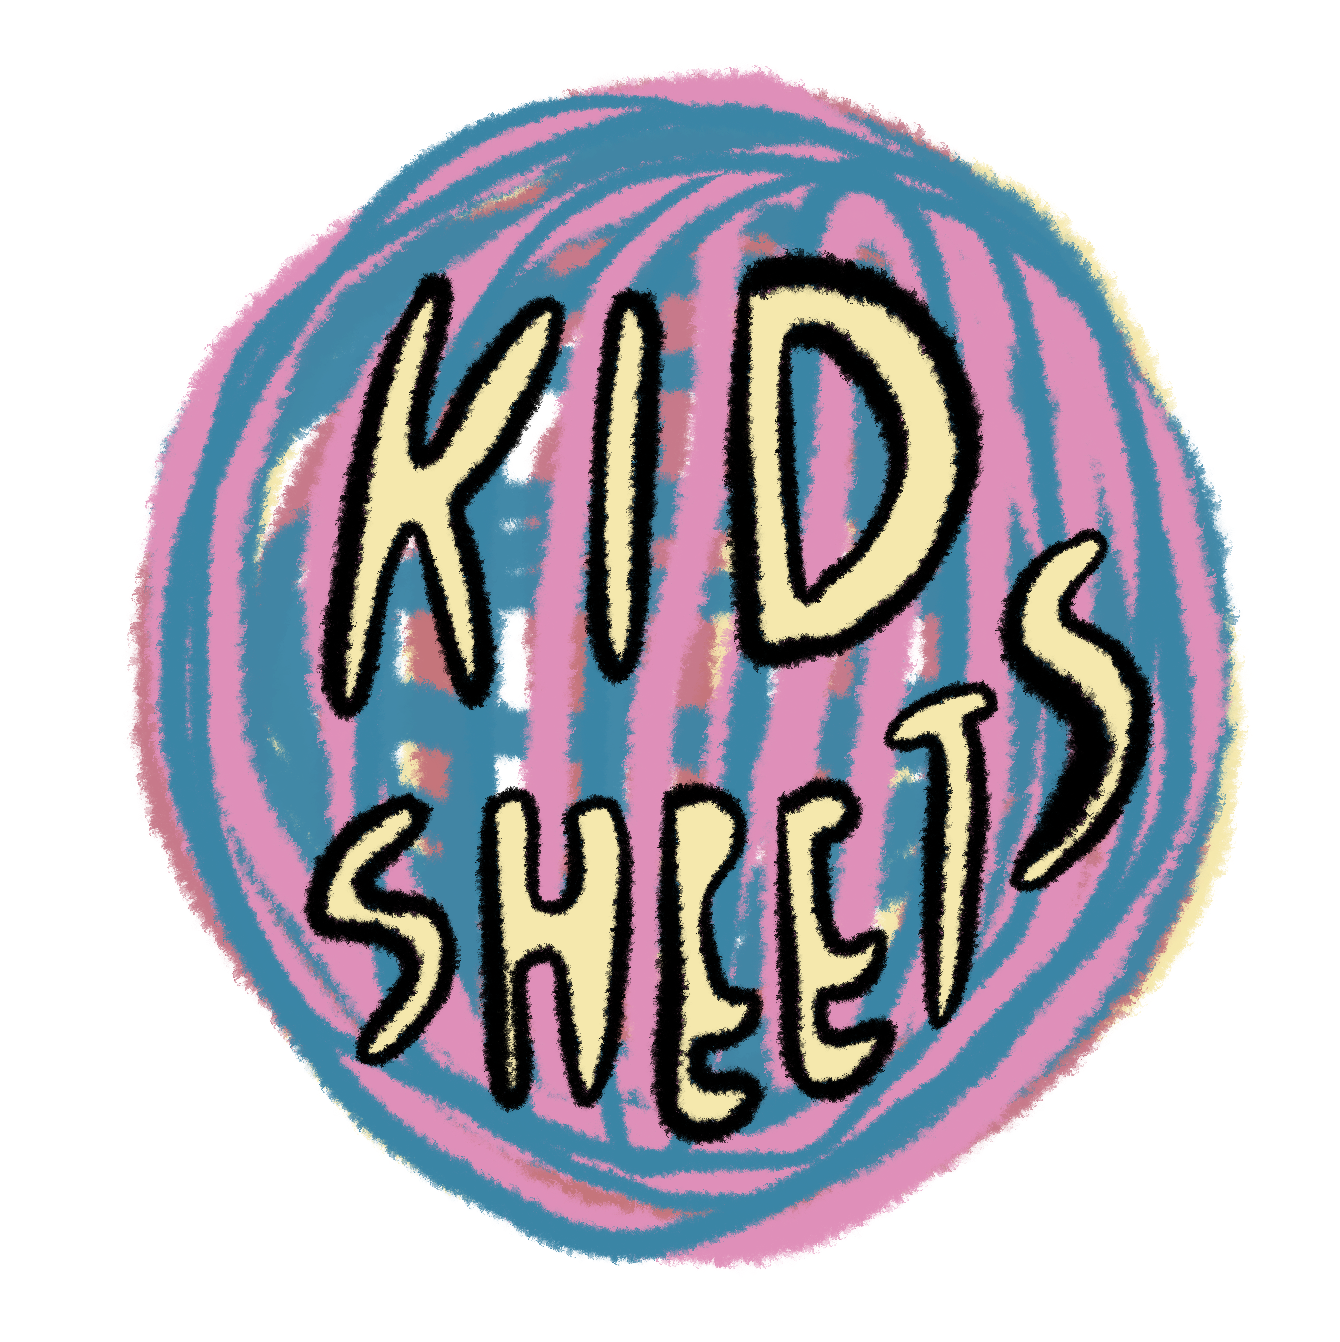 kidsheets